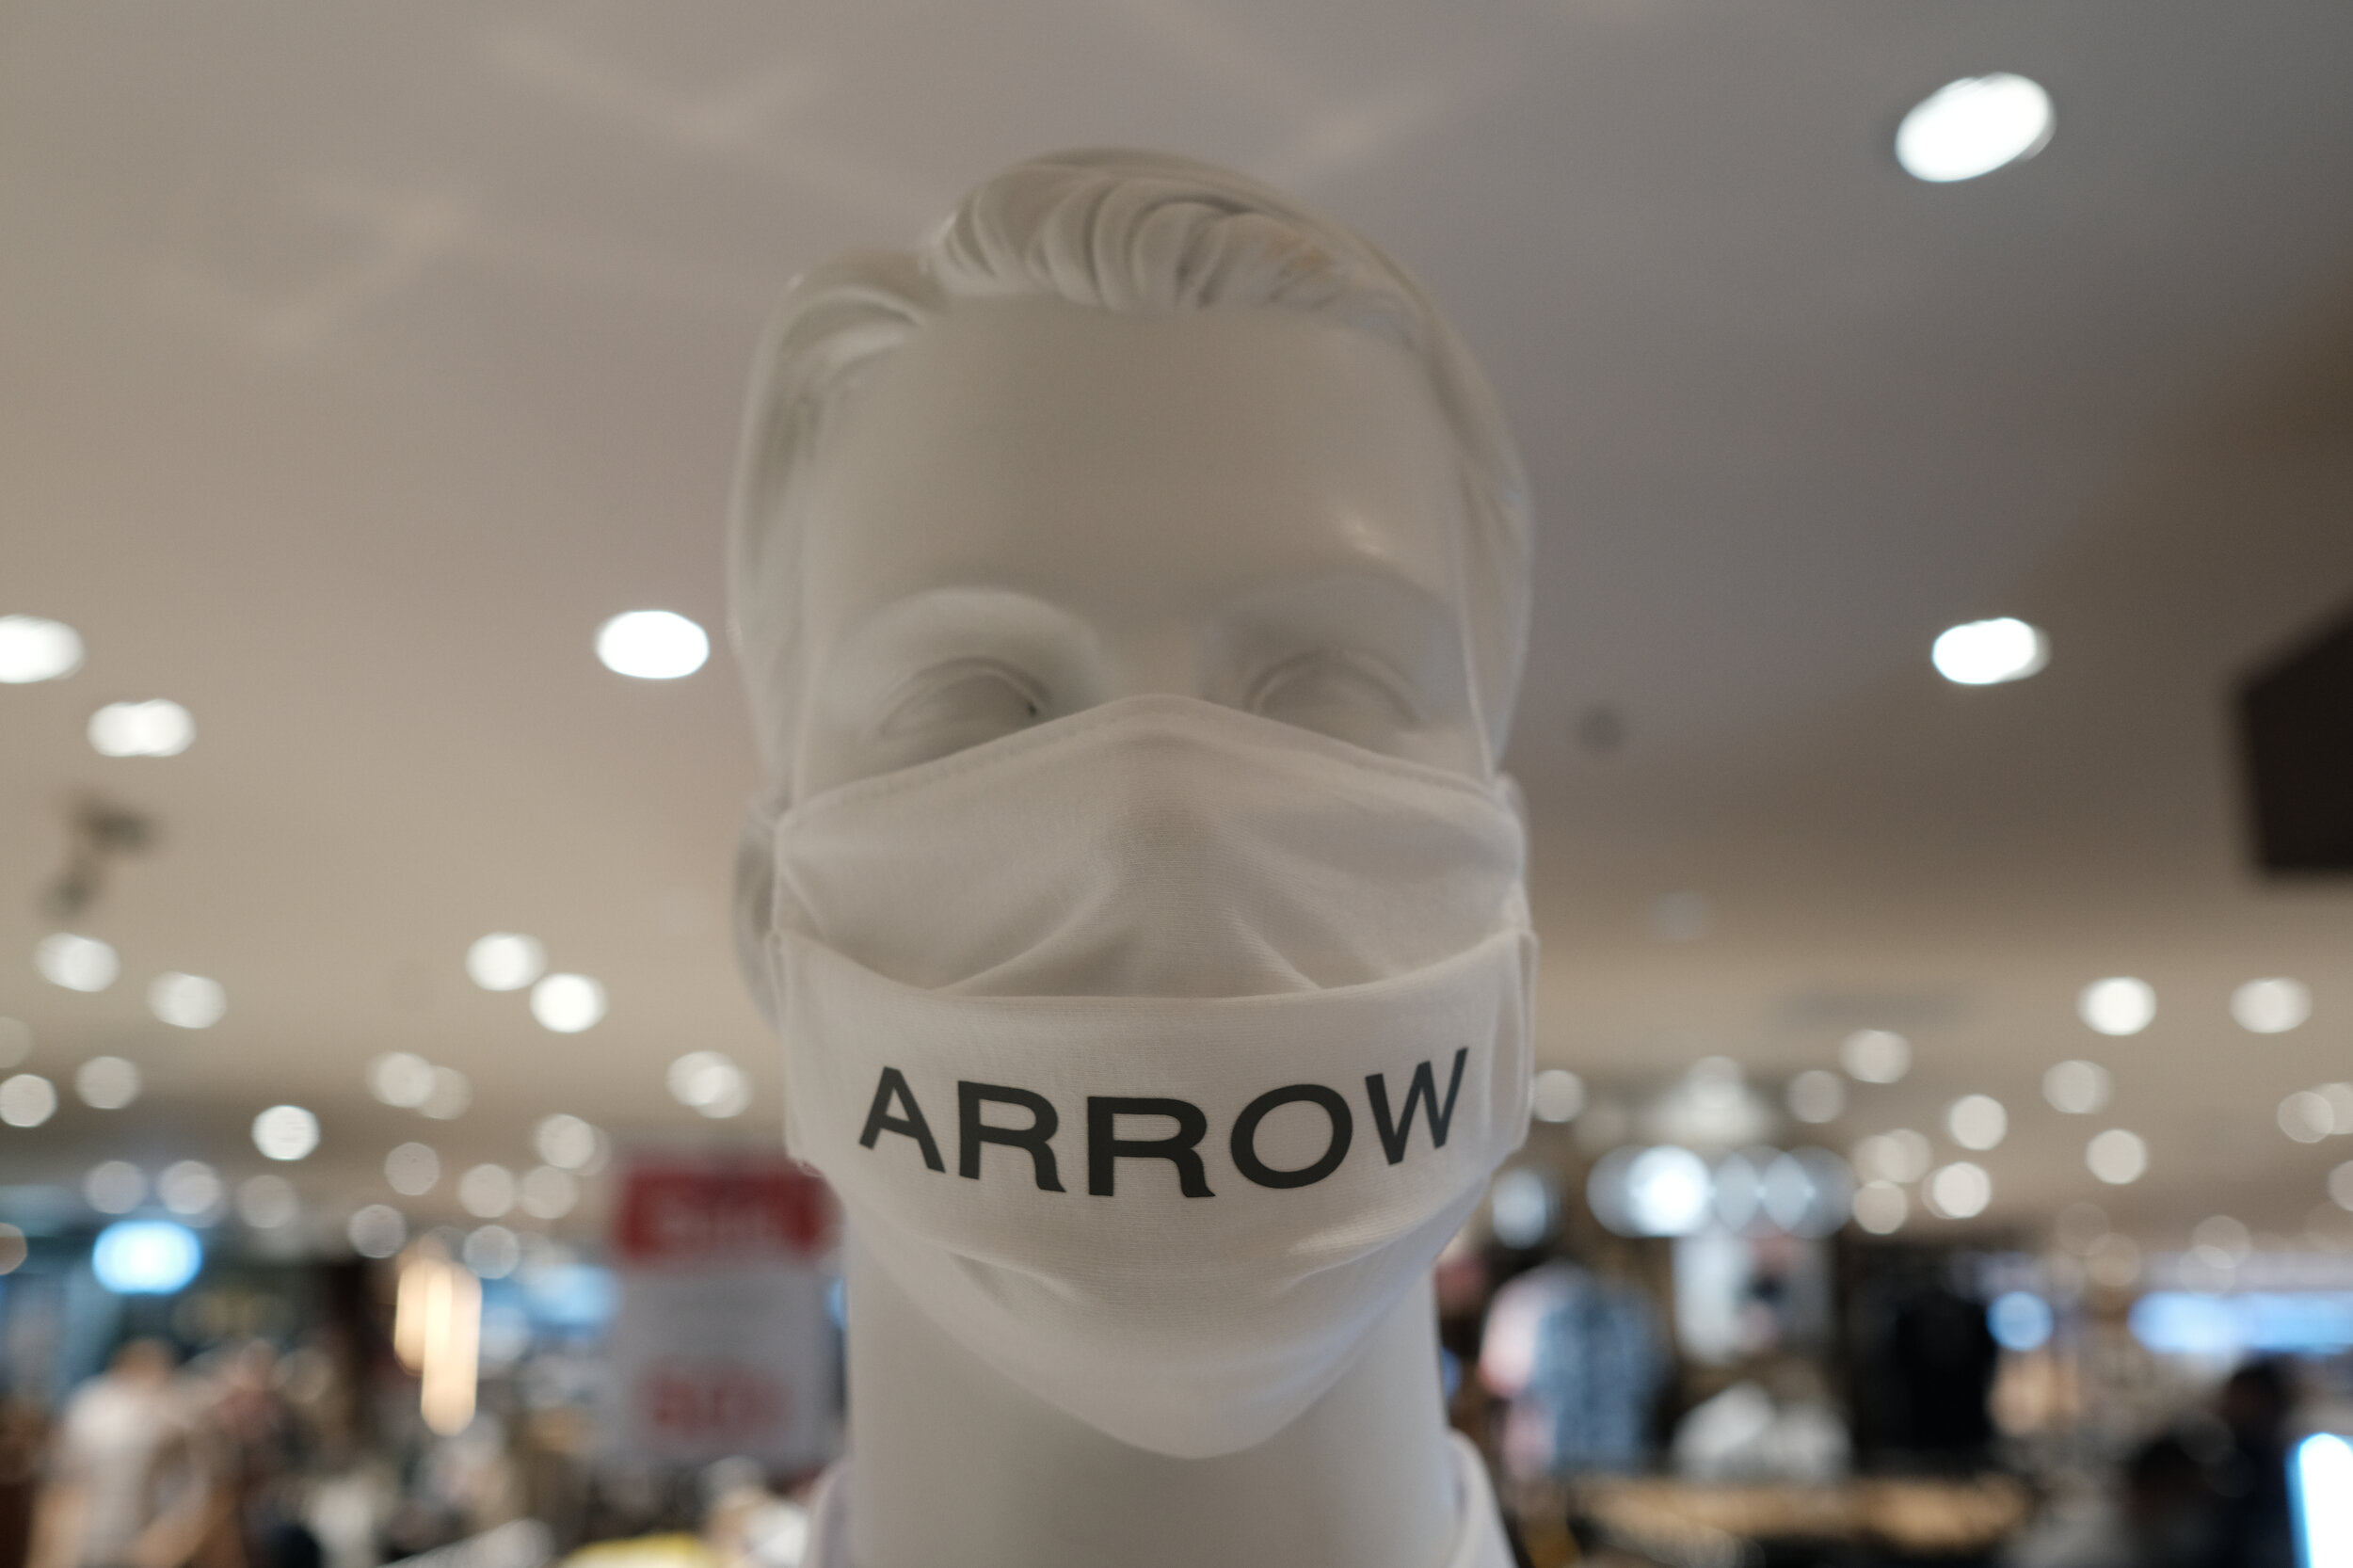 "Arrow Man"